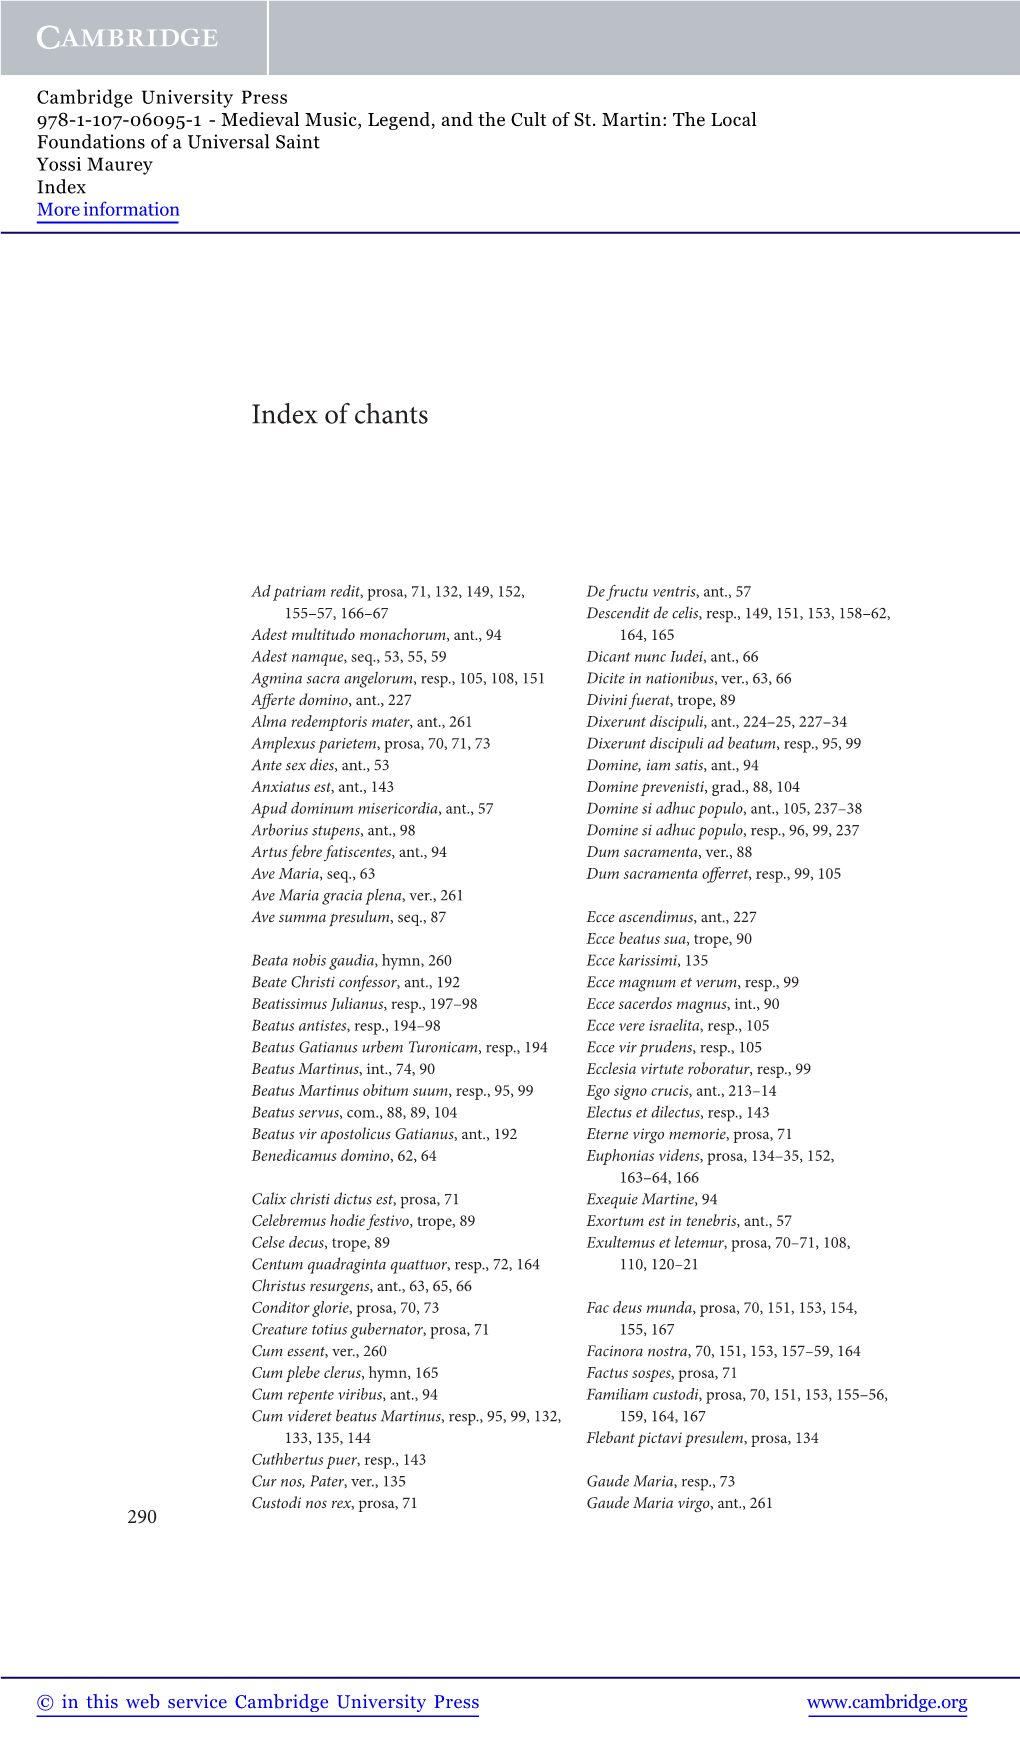 Index of Chants